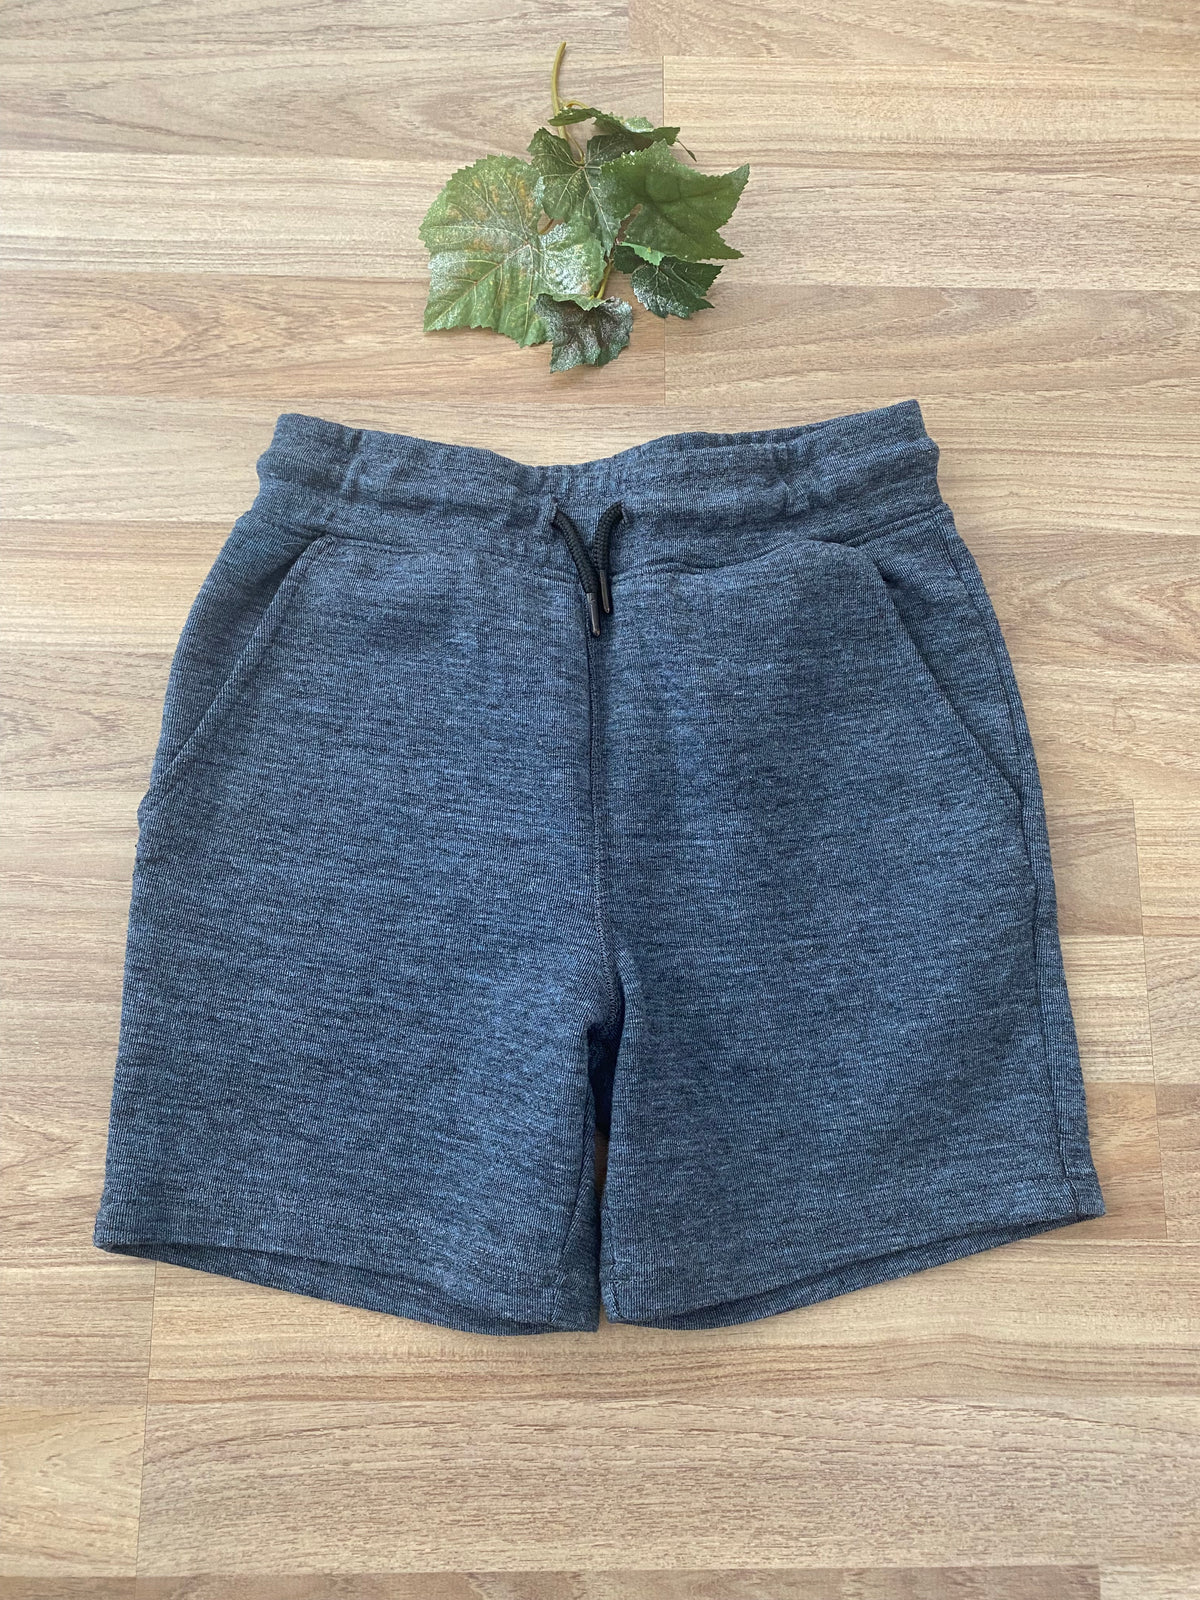 Shorts (Boys Size 10-12)